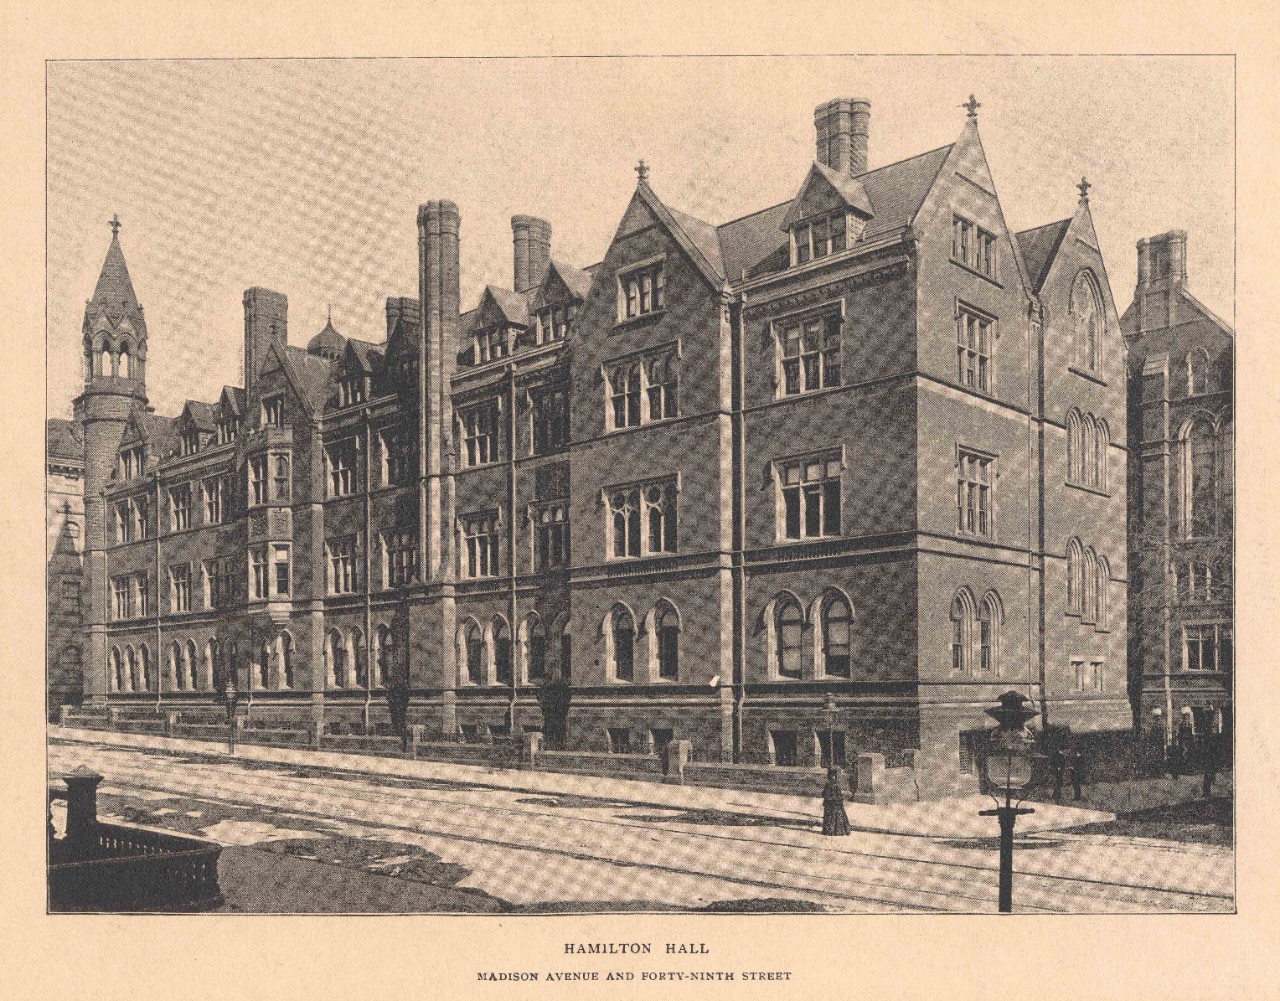 Hamilton Hall, circa 1860